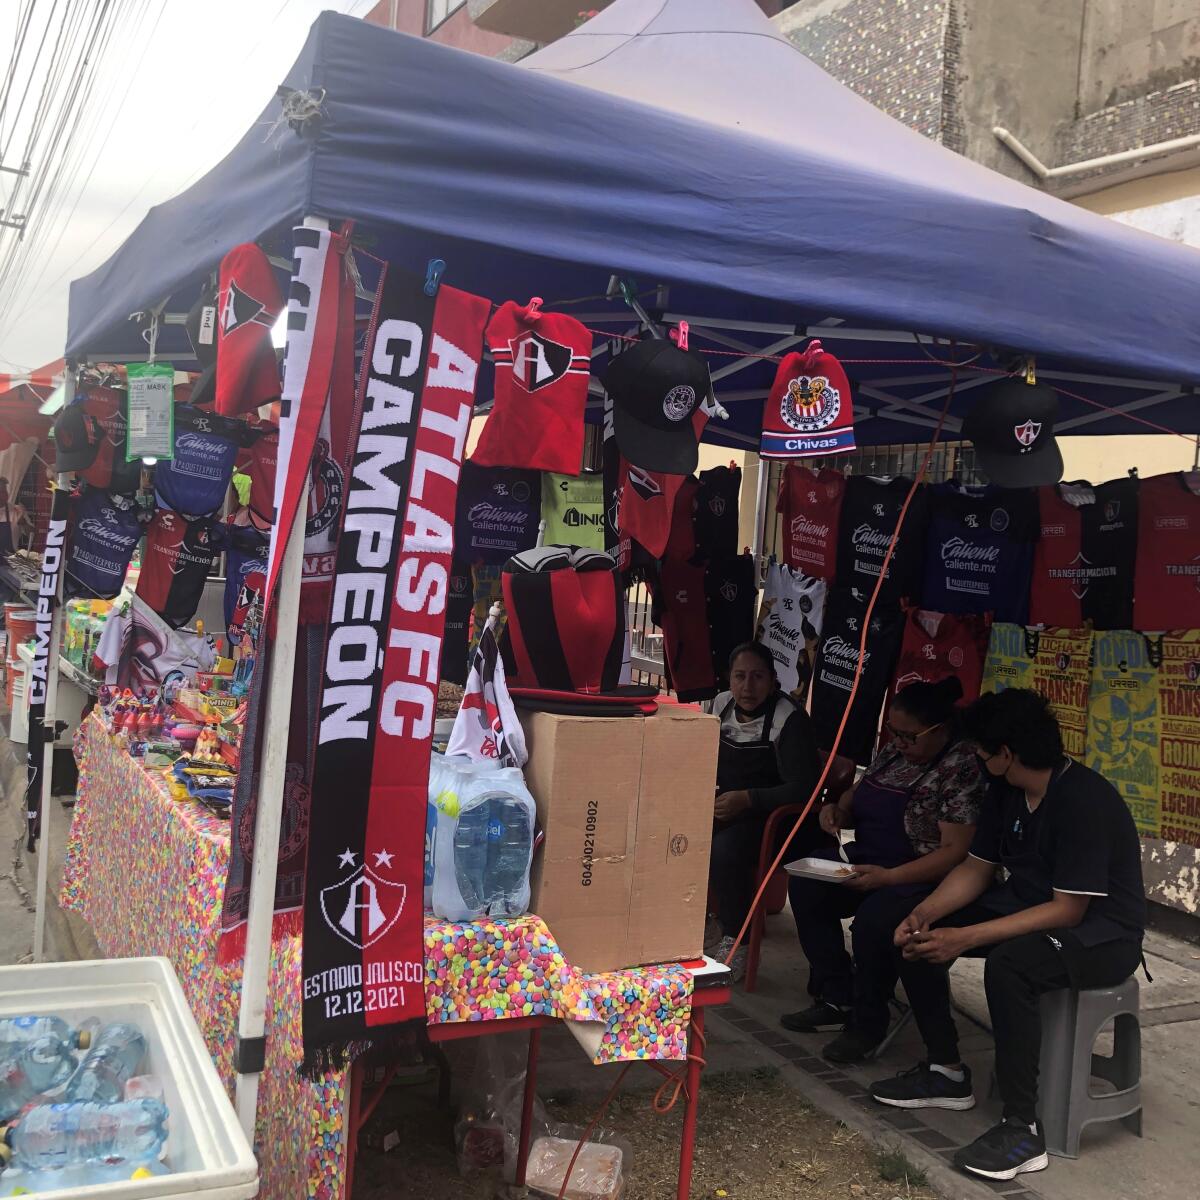 Vendors sell Atlas FC 2021 championship merchandise near Estadio Jalisco in Guadalajara Mexico.